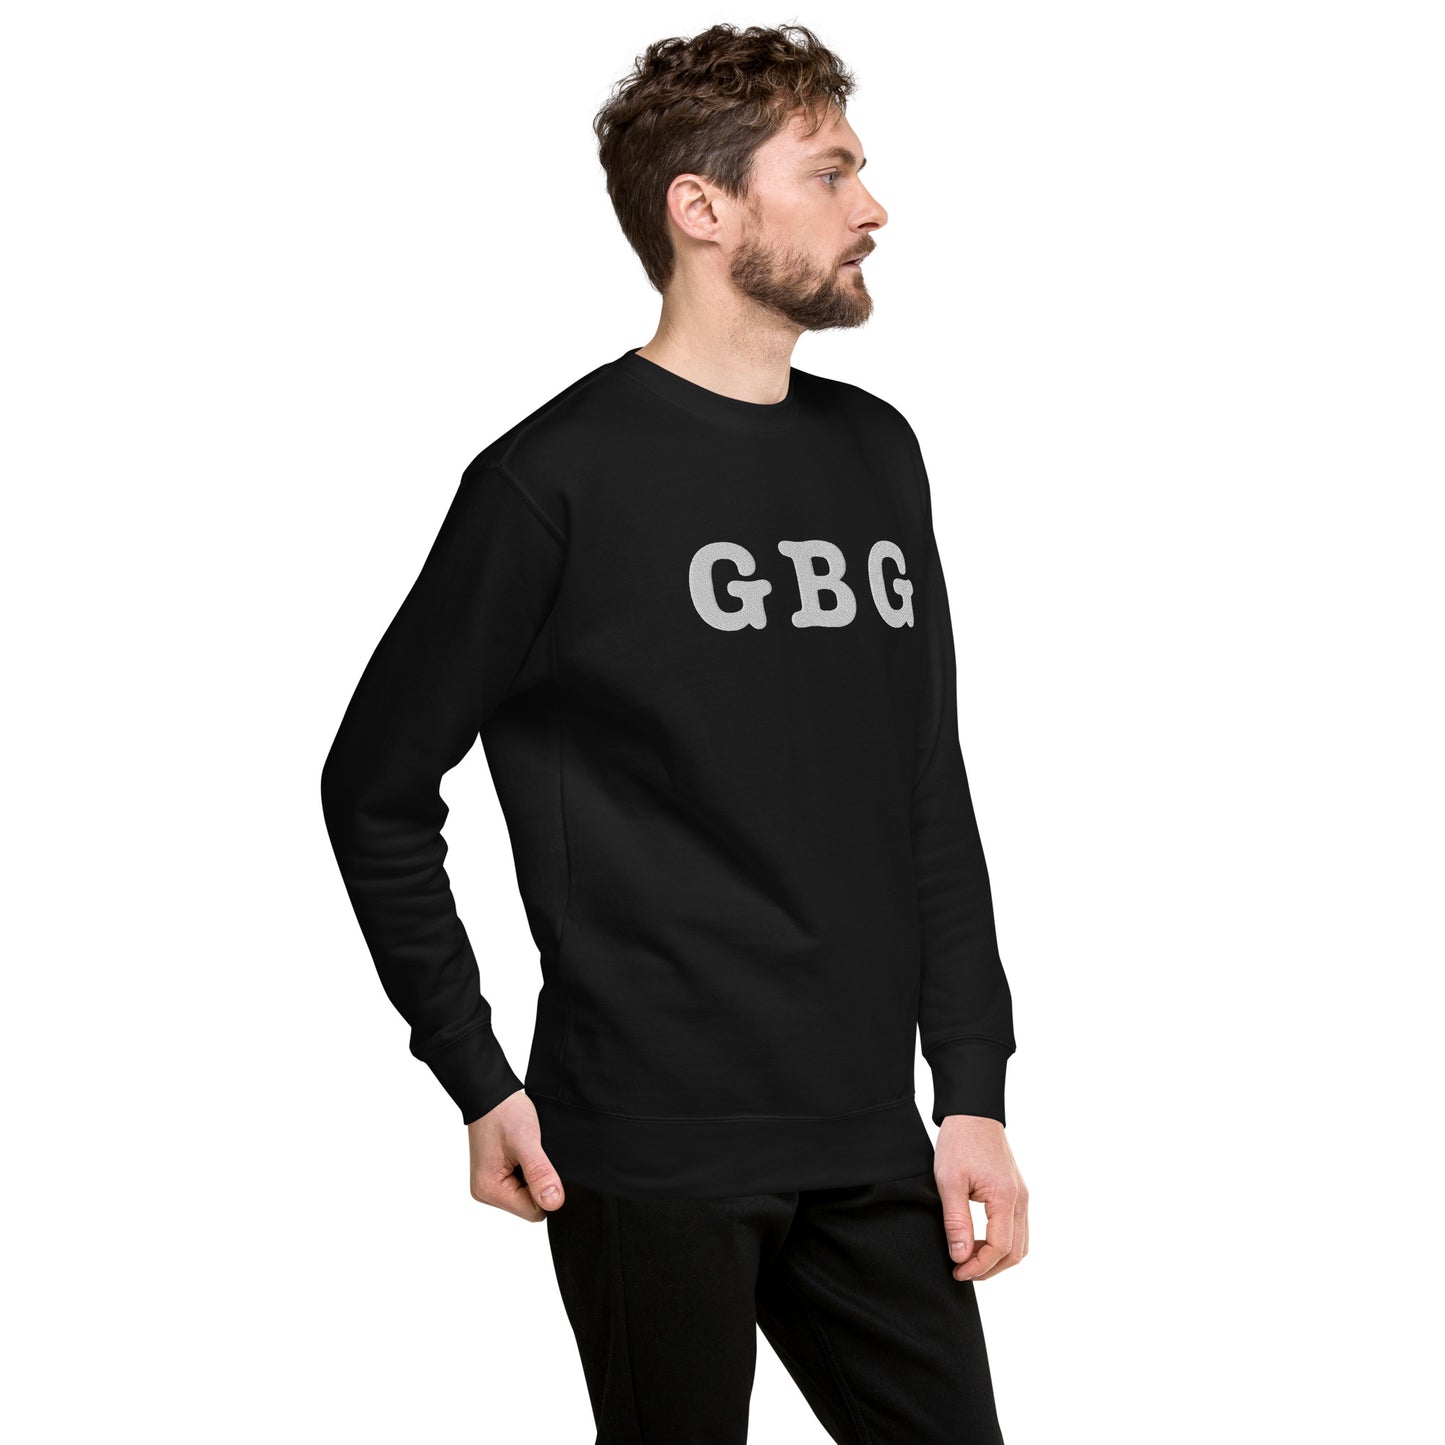 GBG - Premium Unisex Sweatshirt/Collegetröja med vit brodyr